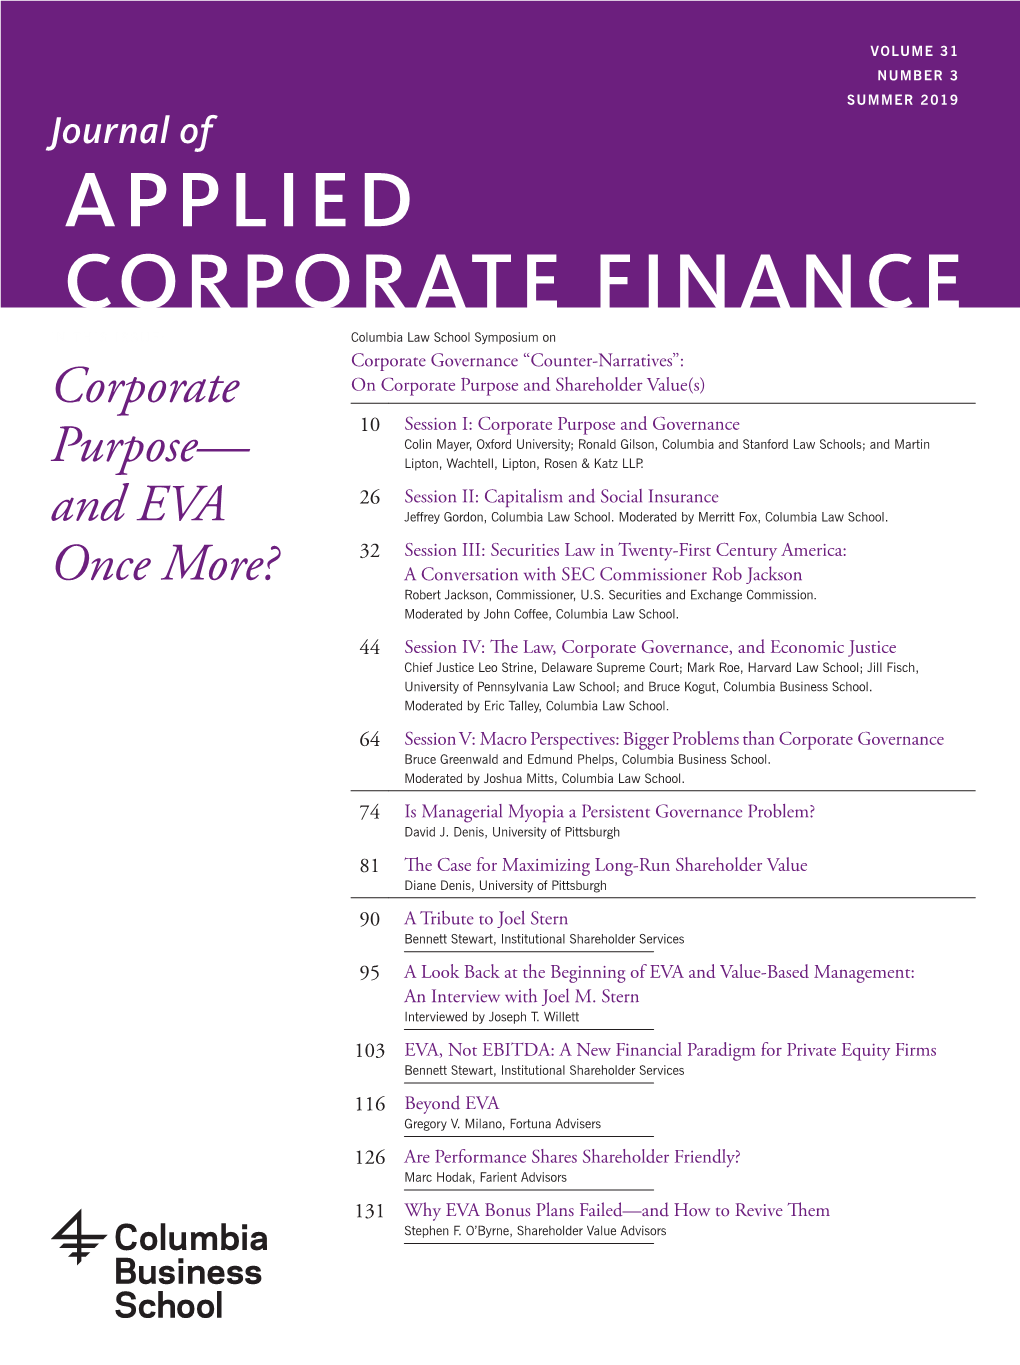 Journal of Applied Corporate Finance